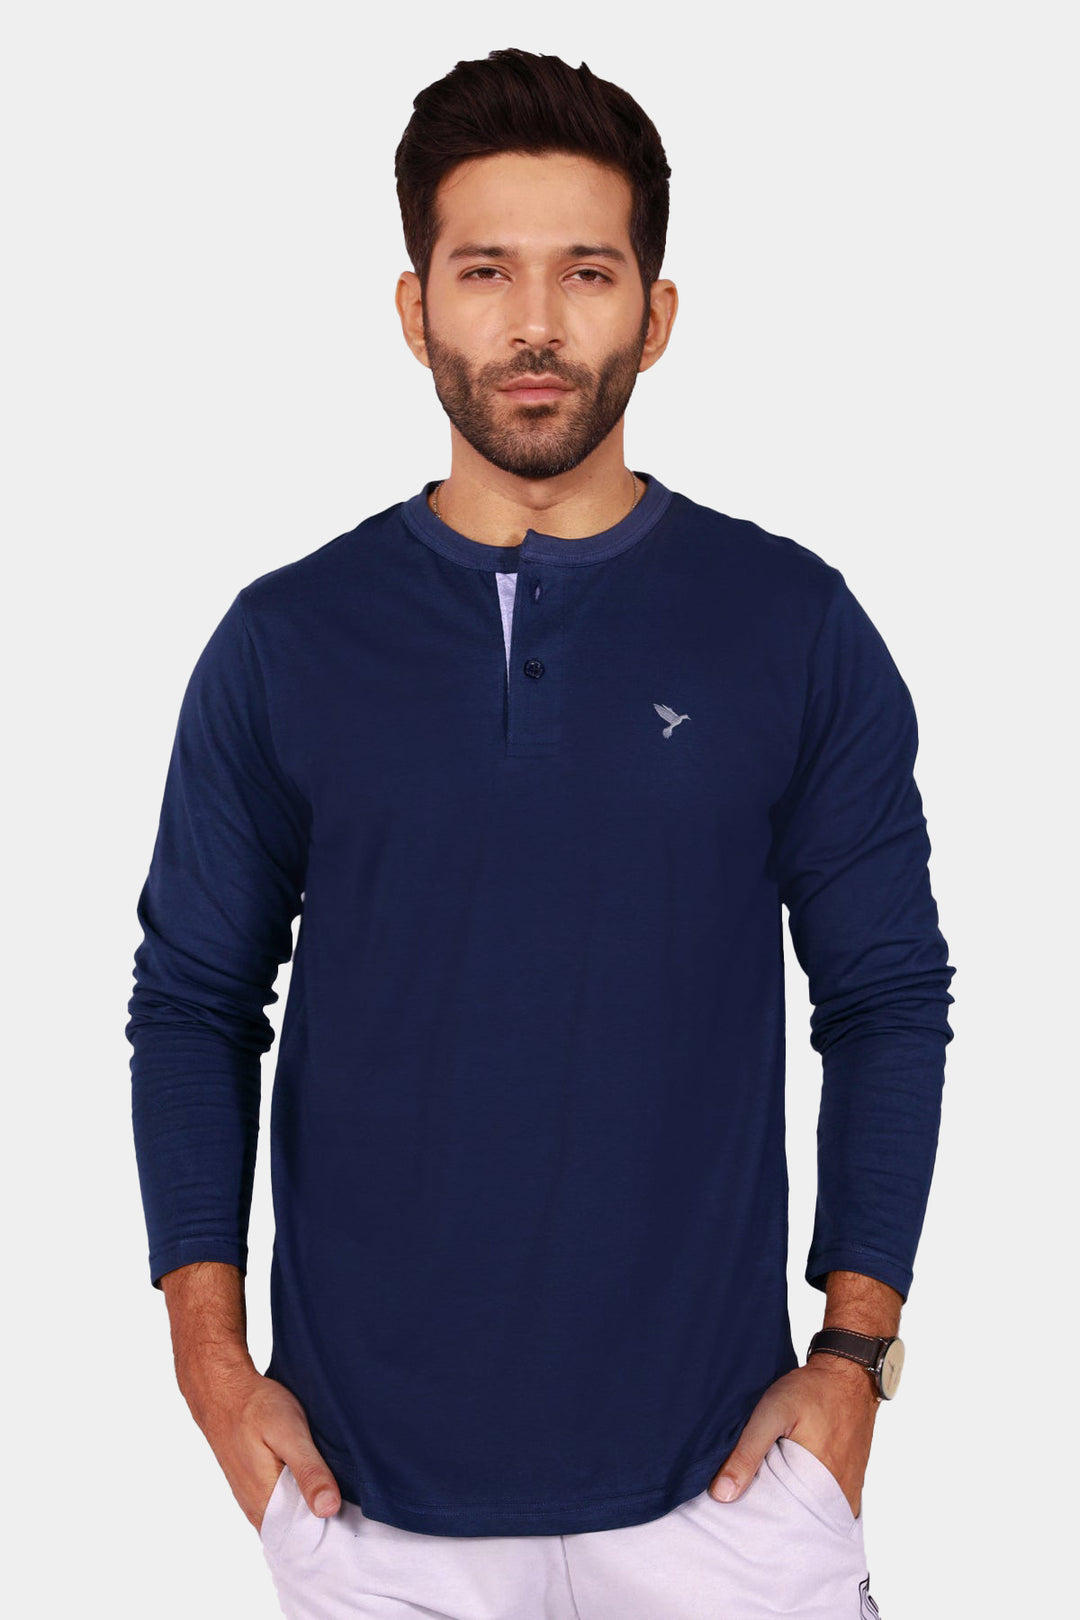 Navy Blue Full Sleeves T-Shirt - S22 - MT0189R